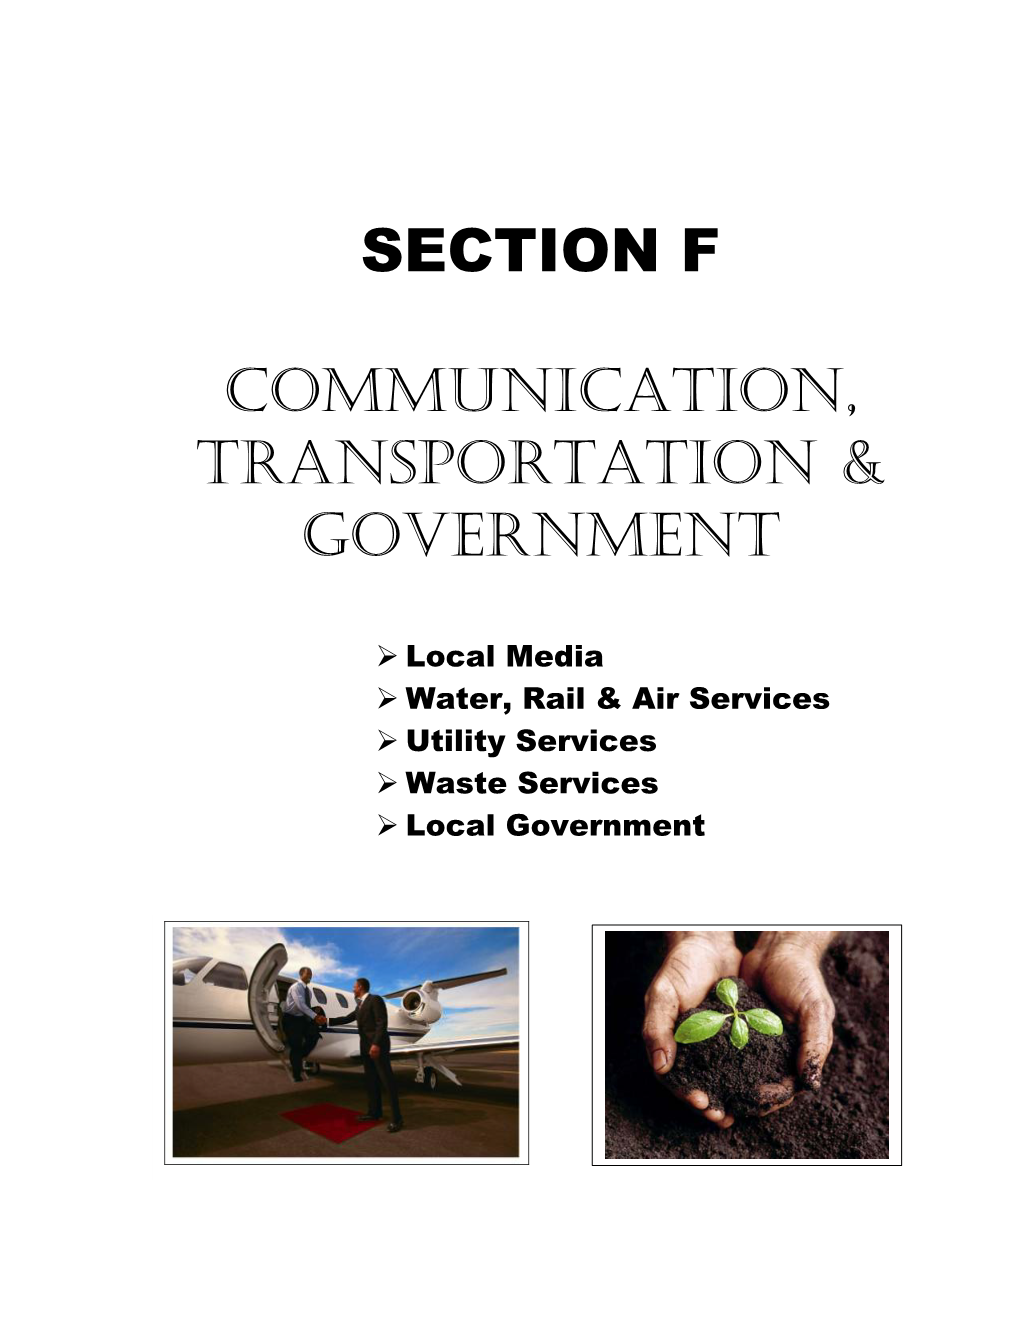 Section F Communication, Transportation